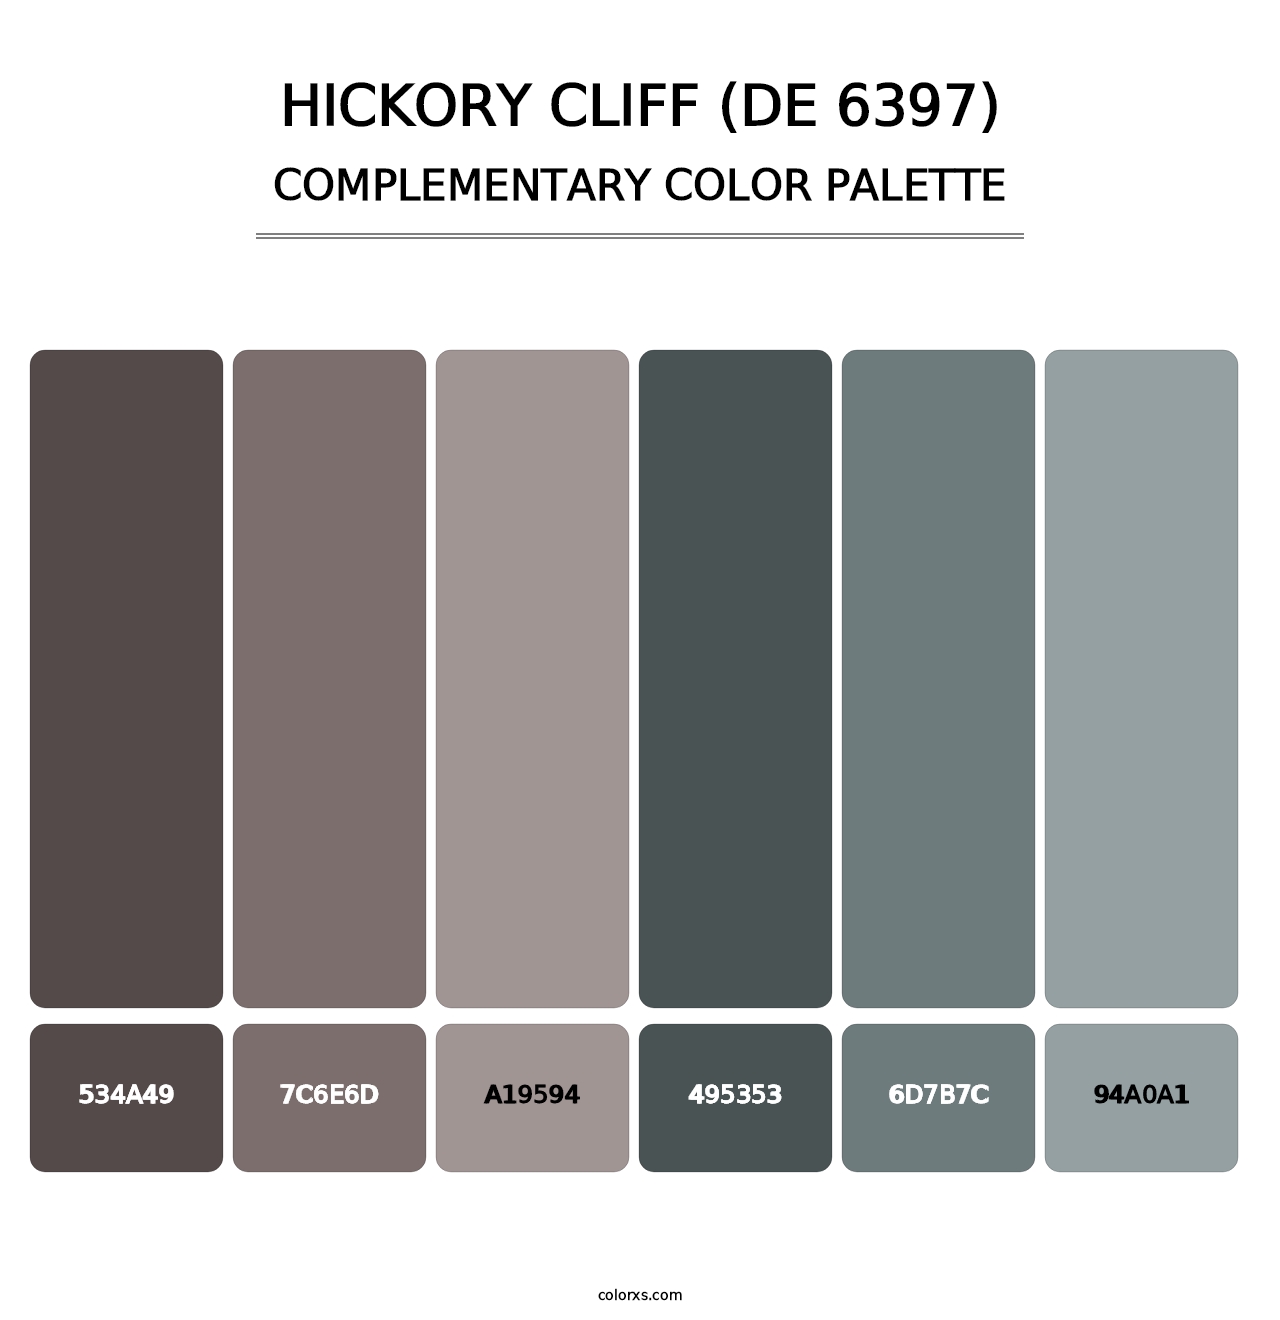 Hickory Cliff (DE 6397) - Complementary Color Palette